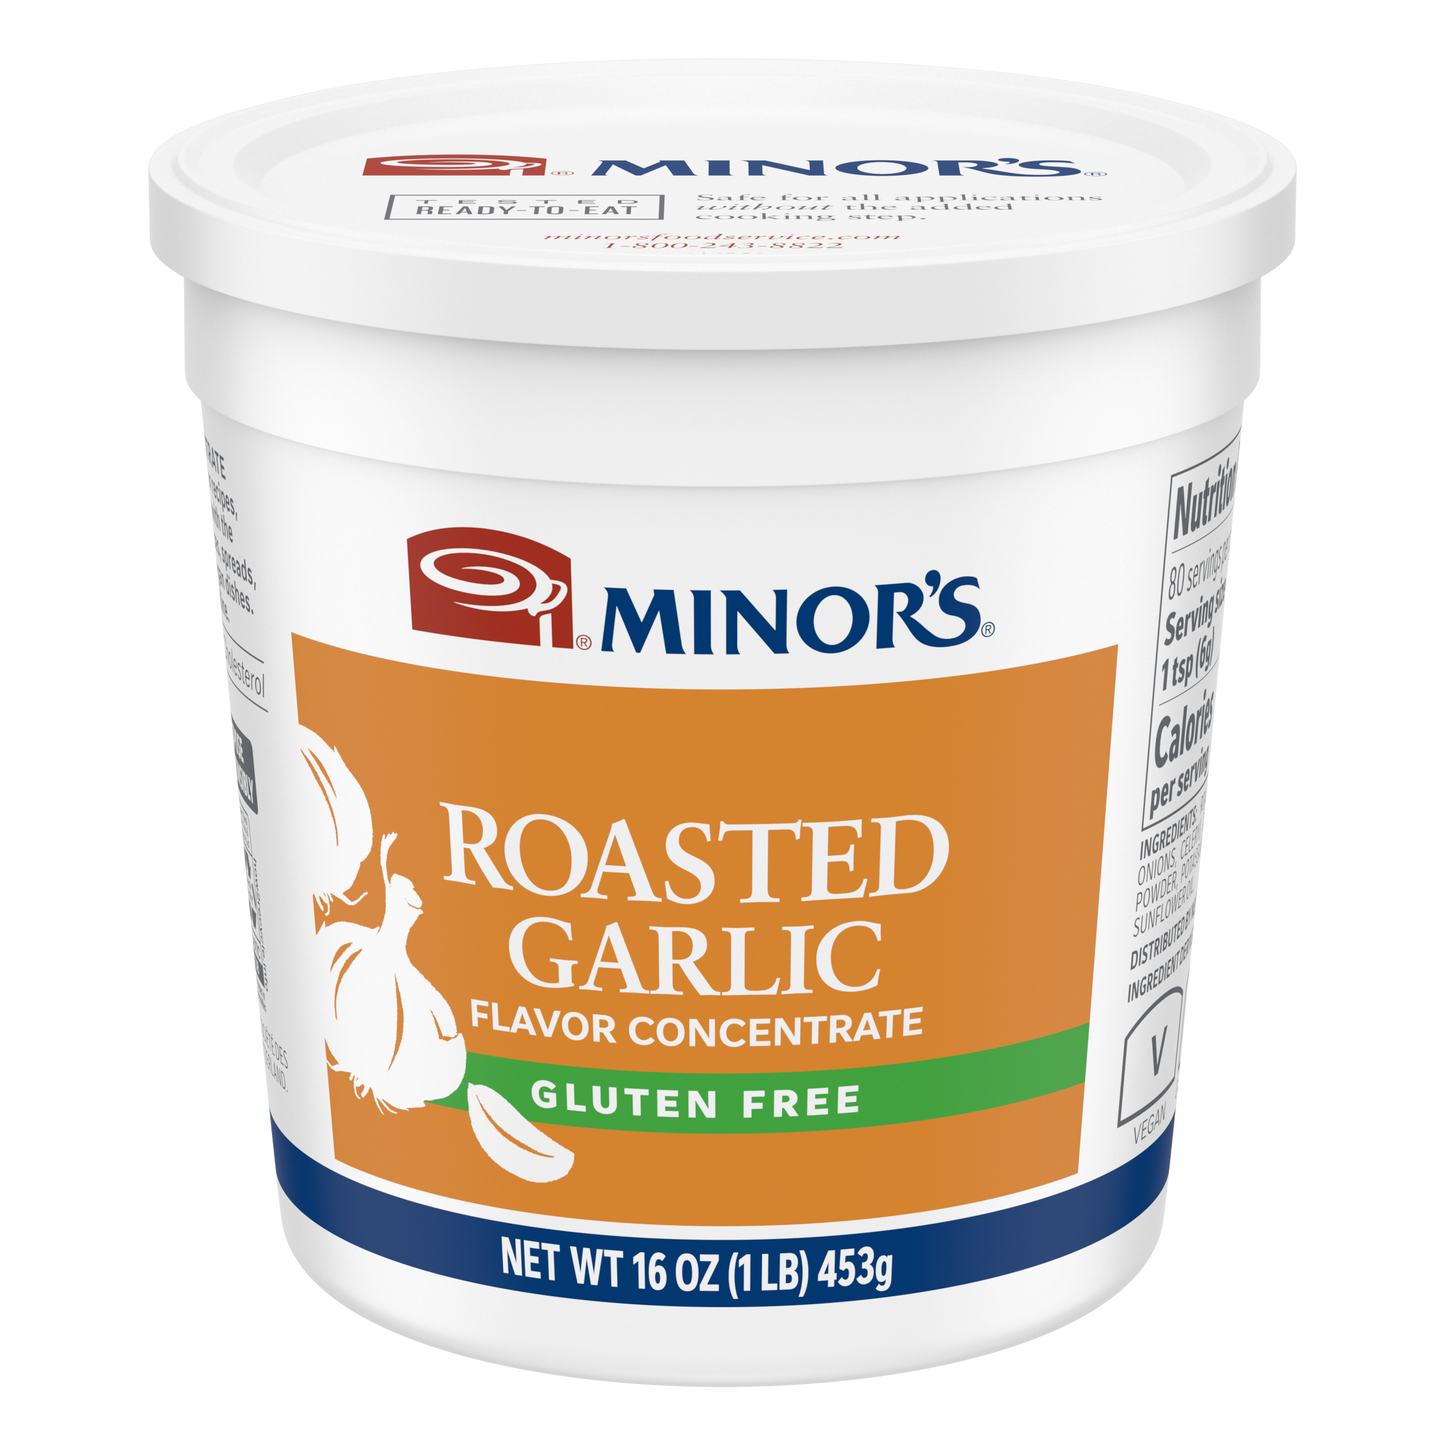 Minor's Roasted Garlic Flavor Concentrate